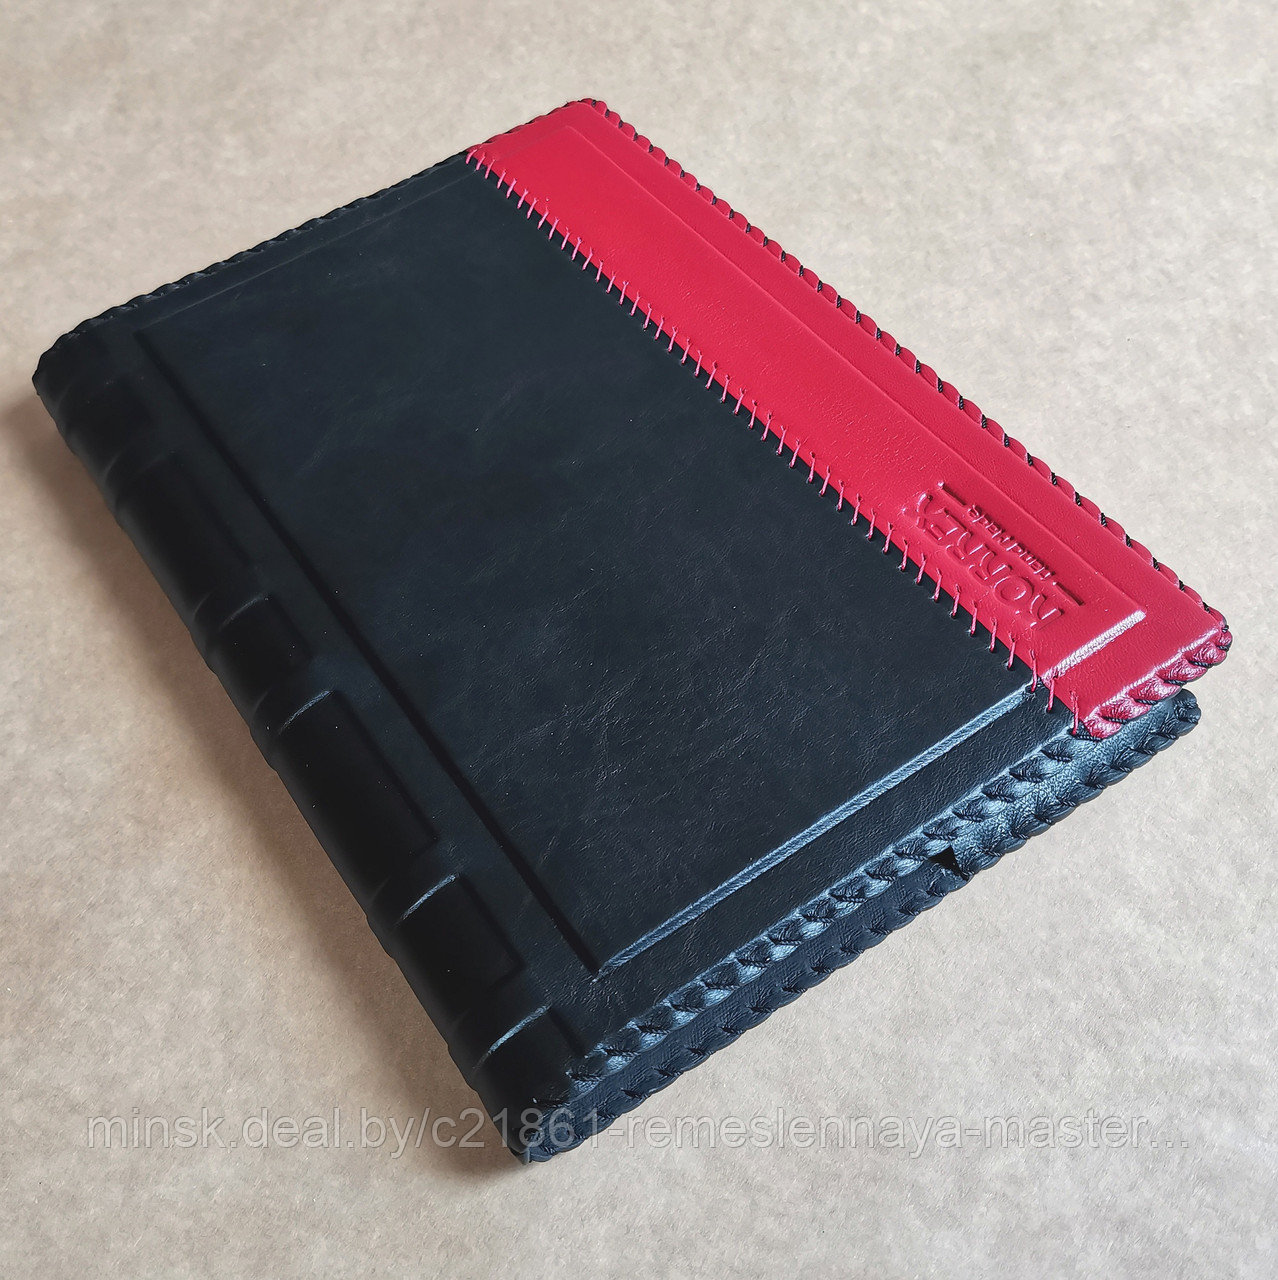 Съемная кожаная обложка на ежедневник ф-та А5 (черно-красная) Арт. 4-245